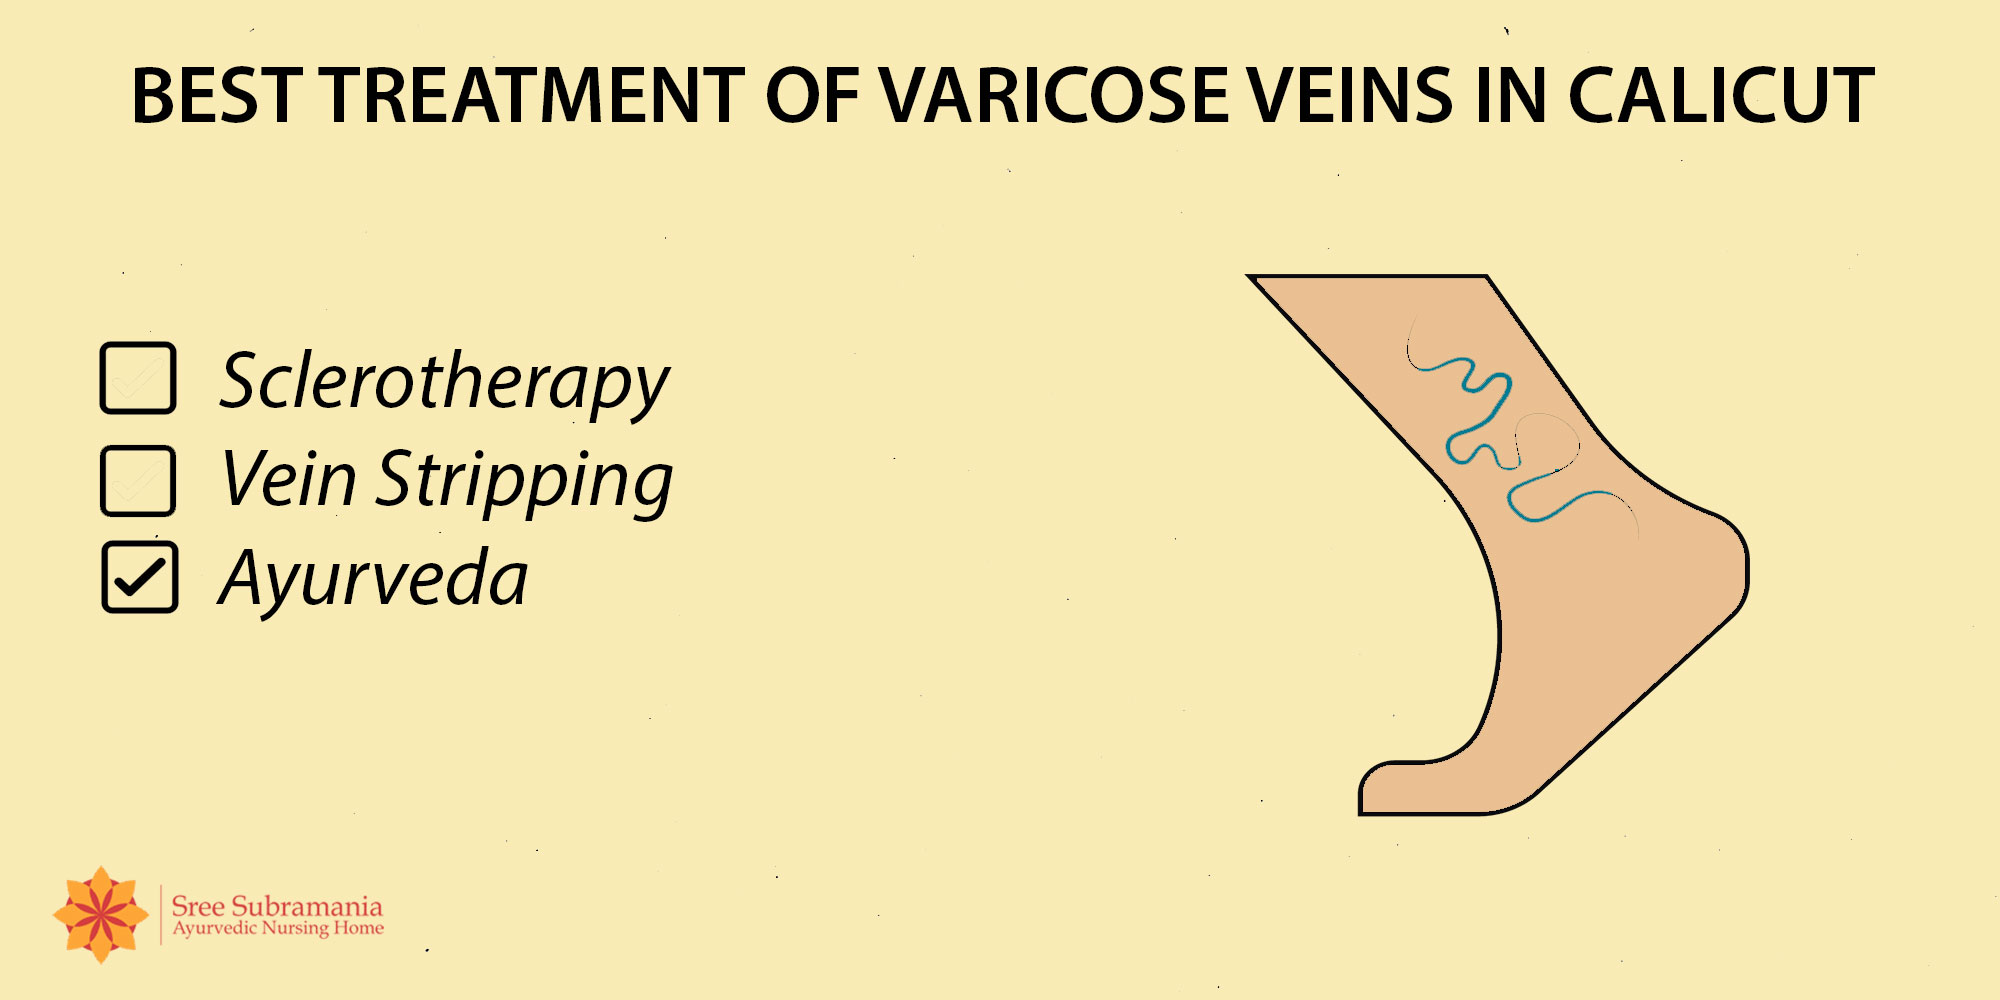 Ayurveda is the best varicose veins treatment option